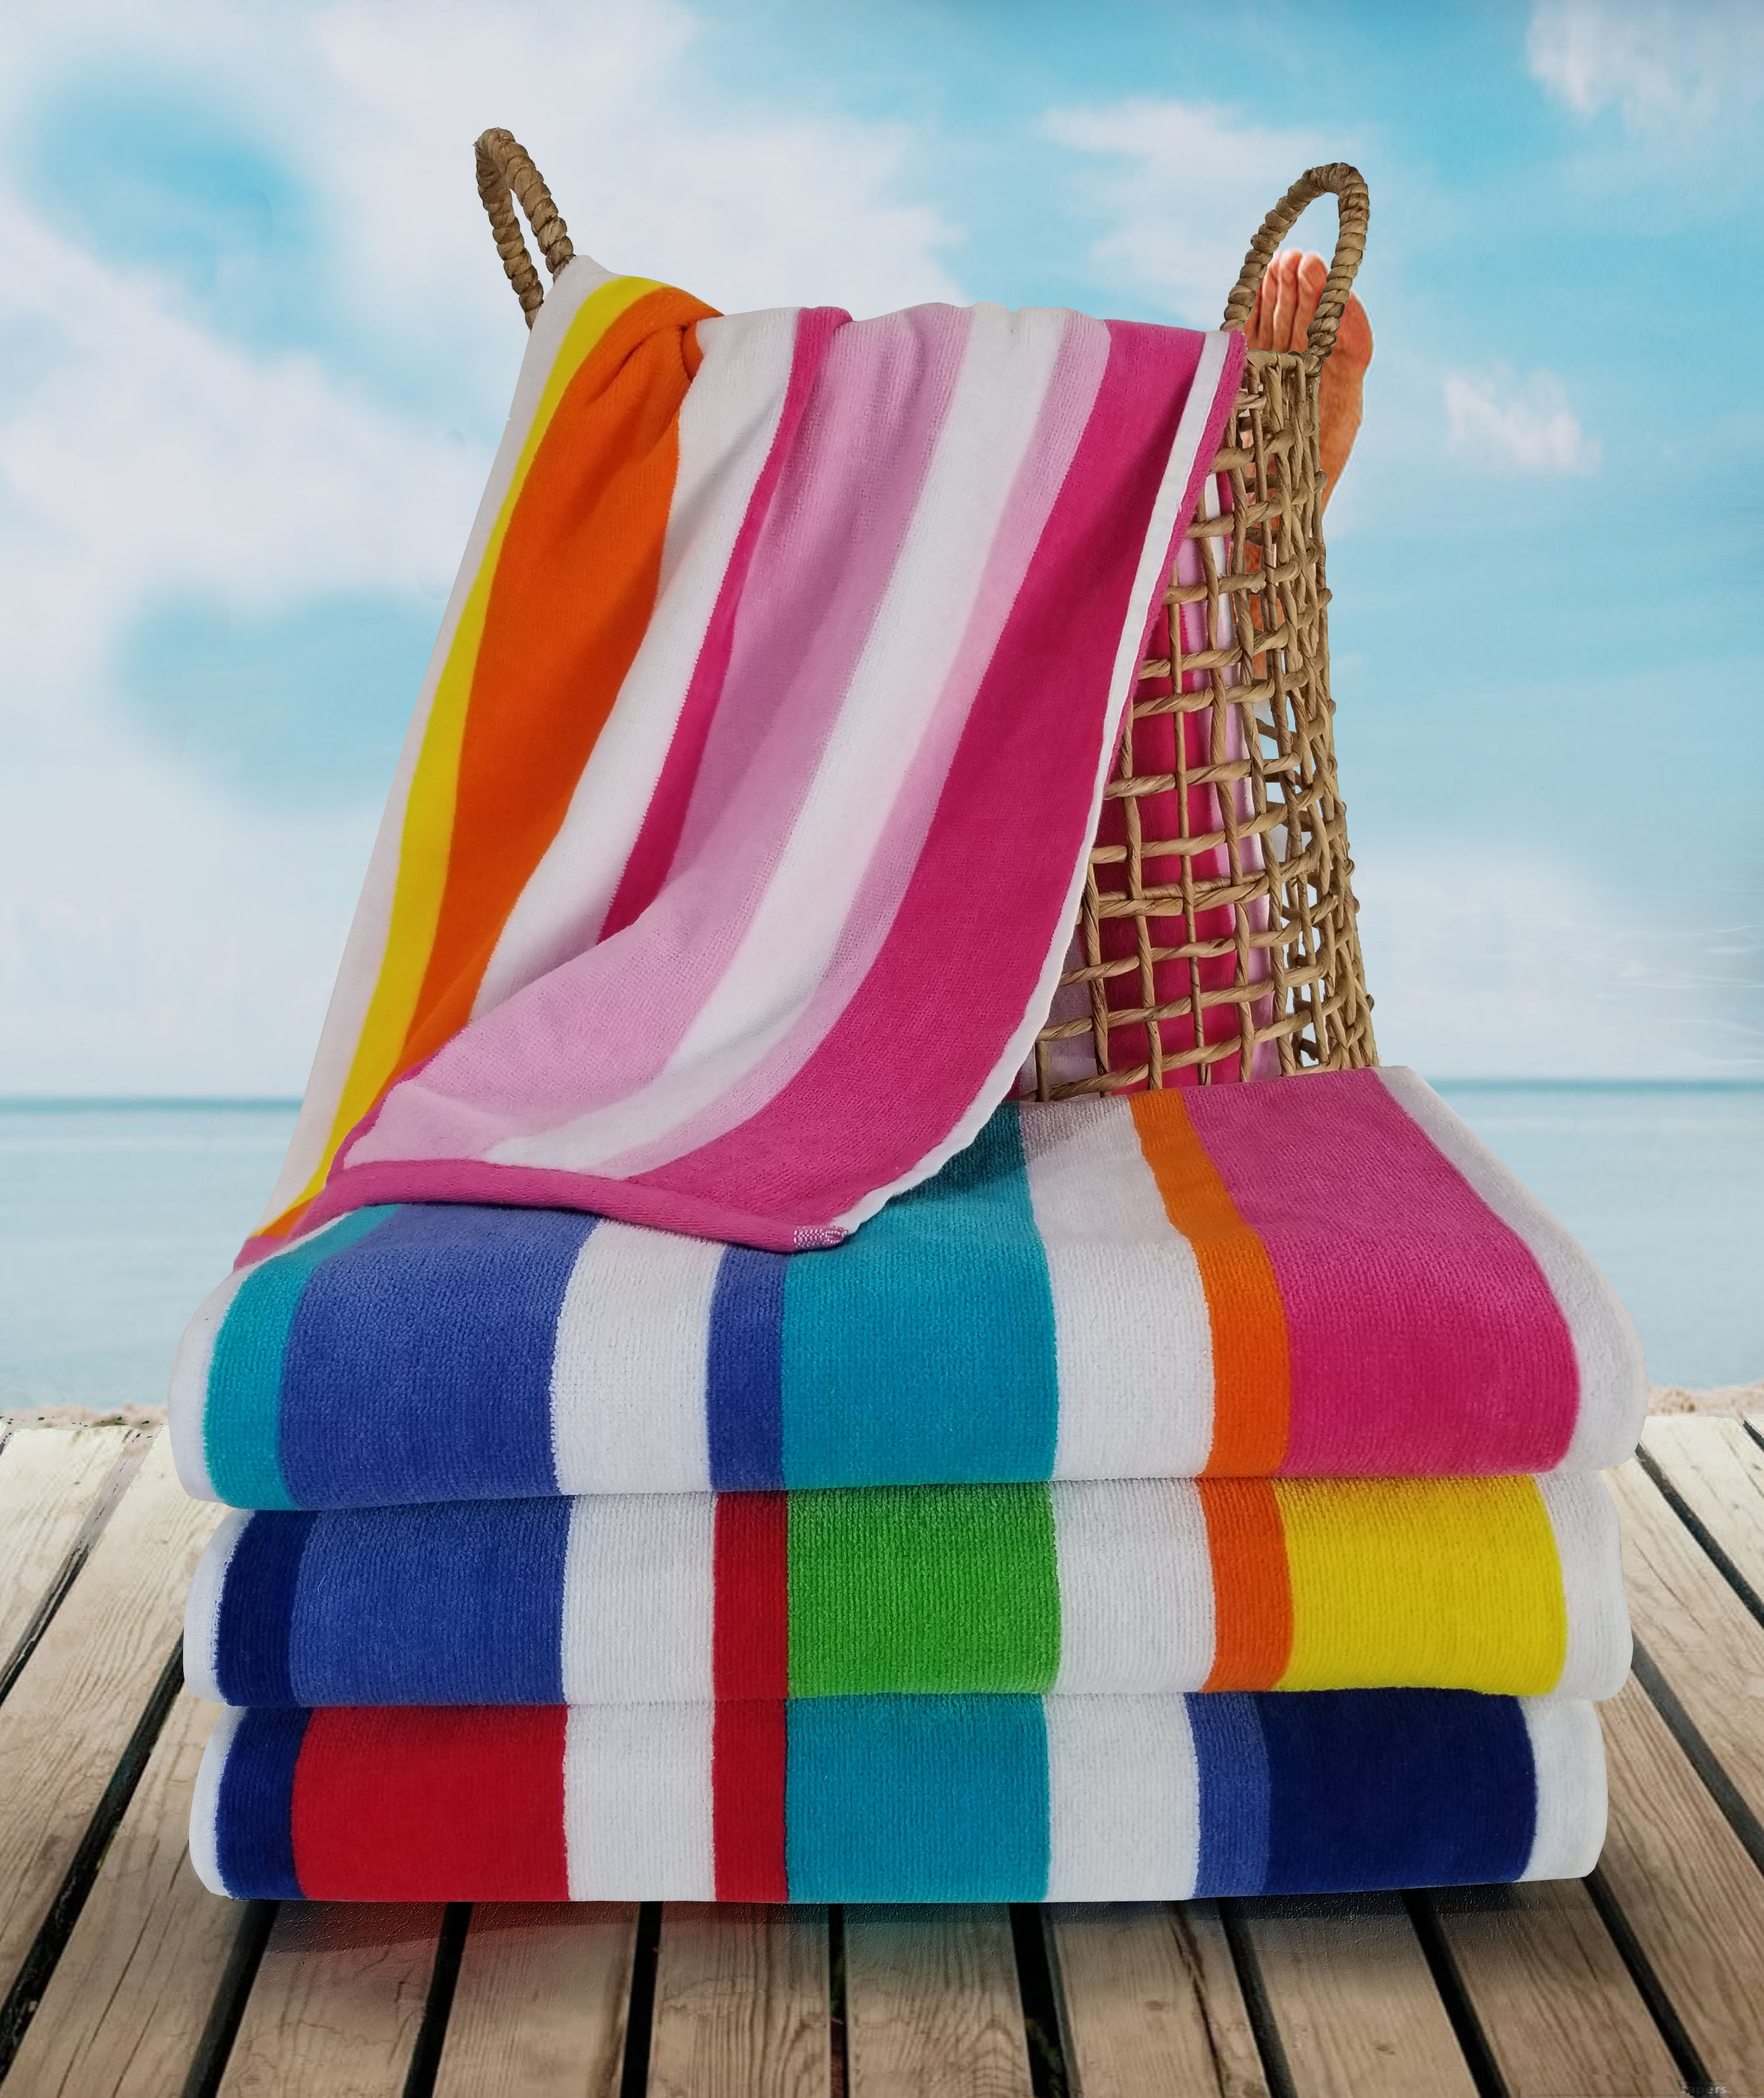 32x63 Terry Beach Towels Cotton Velour Maya Island Joy-Exclusive Multicolor, Cabana Stripe Beach & Pool Towel 14 lbs per doz, 100% Cotton.